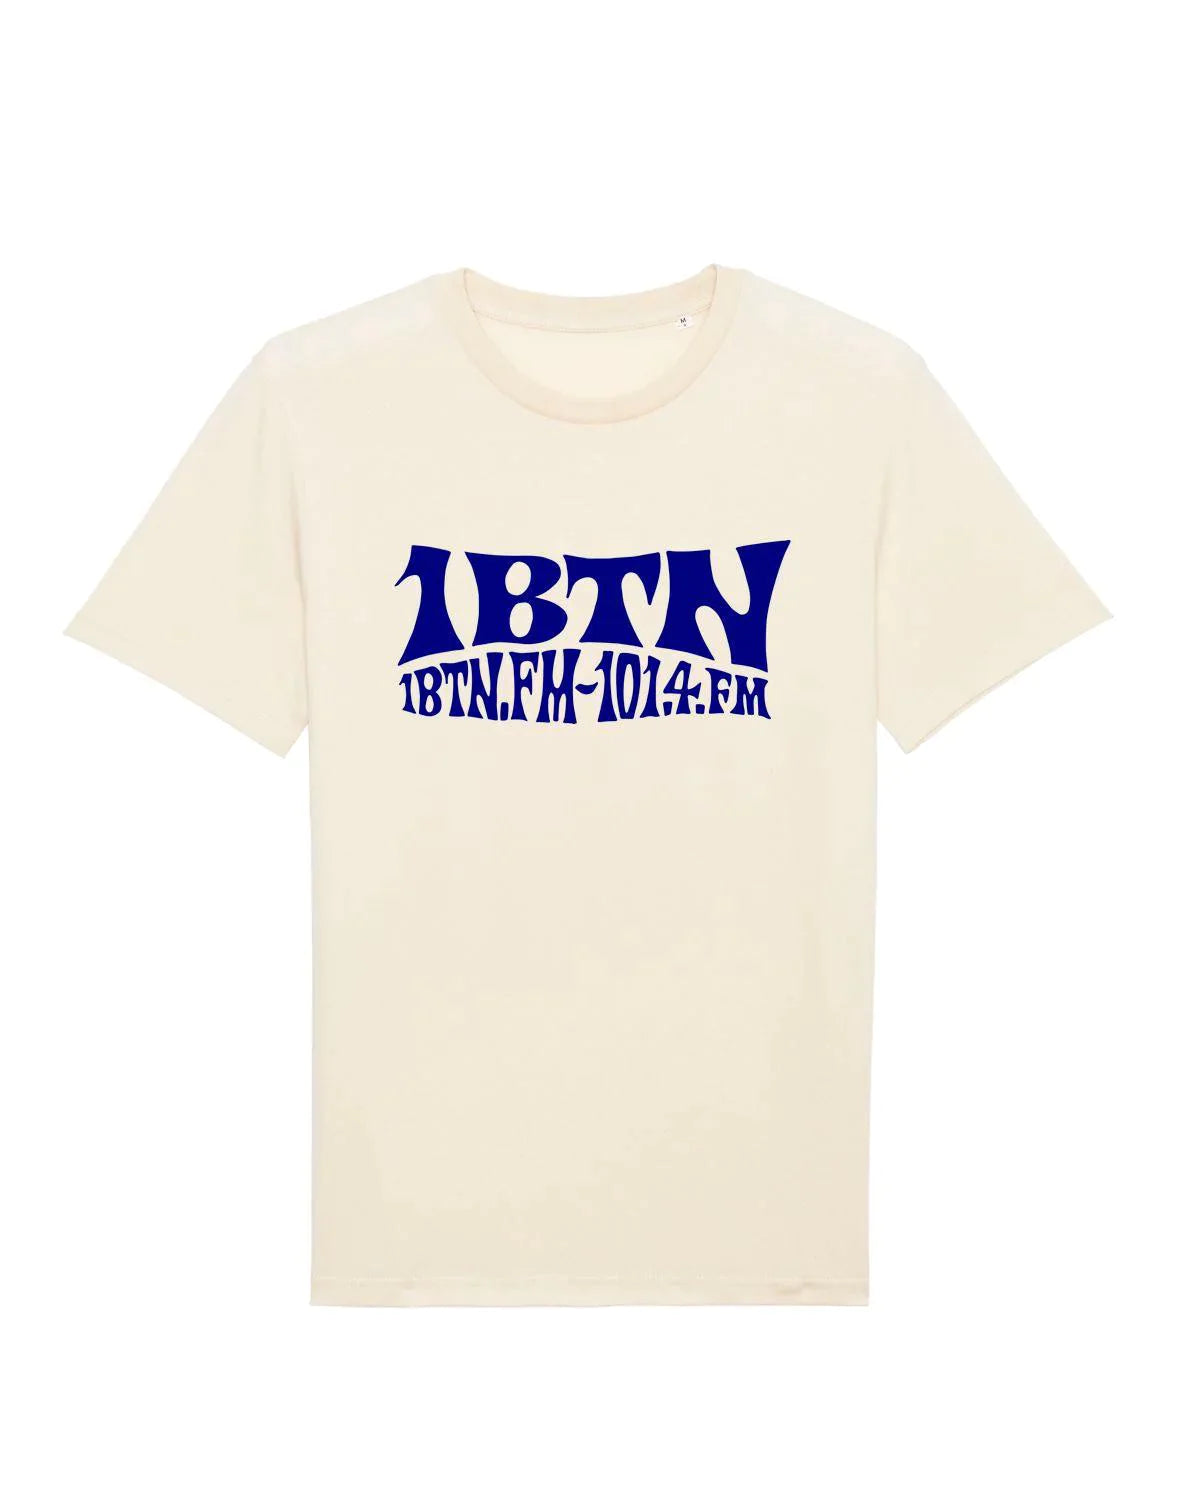 1BTN.FM 101.4 by Swifty: T-Shirt Official Merchandise of 1BTN.FM (5 Colour Options) - SOUND IS COLOUR